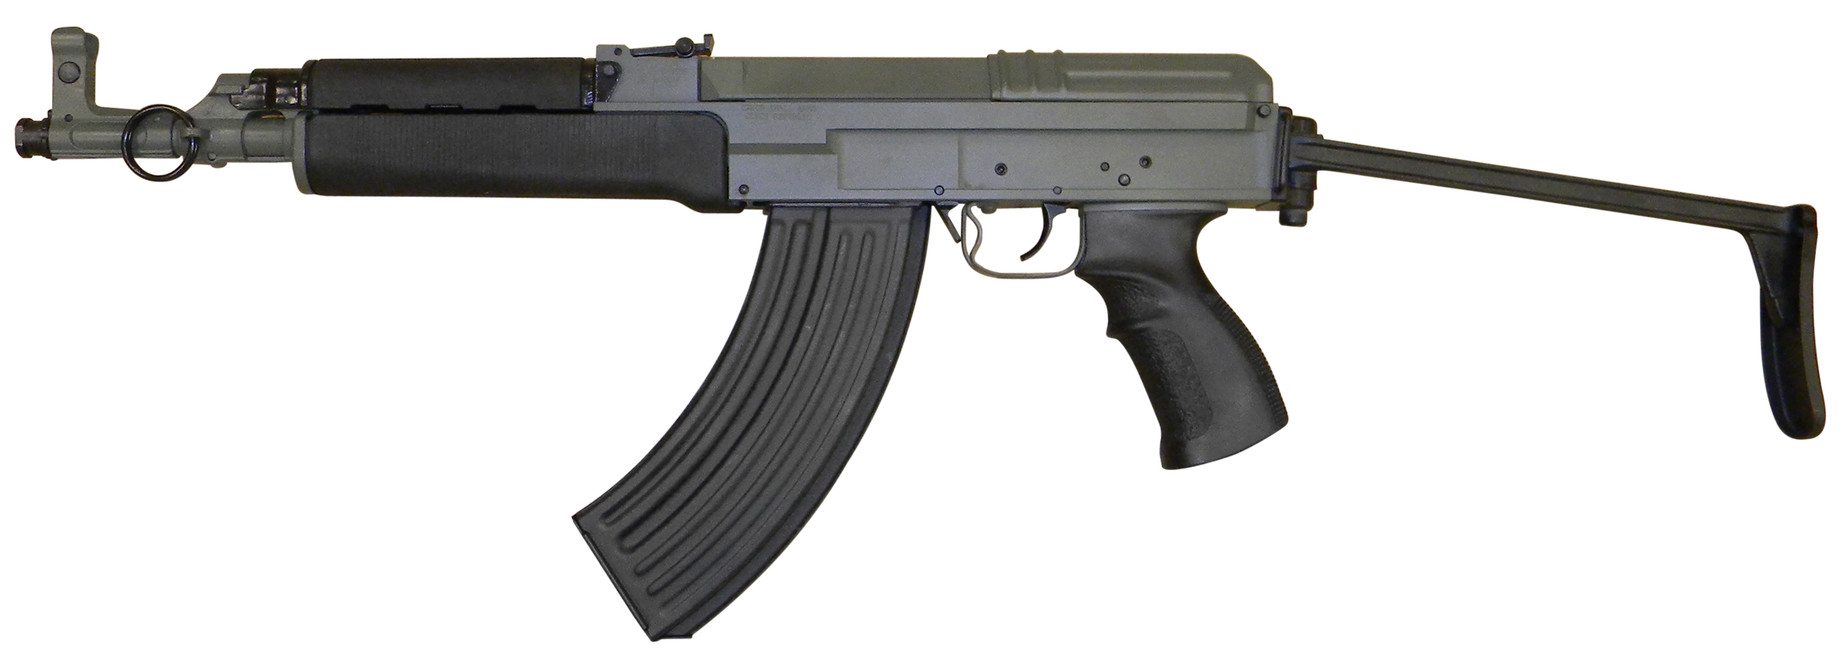 Submachine Gun Vz 58 Sporter Carbine Cal 7 62 X 39 Mm Green